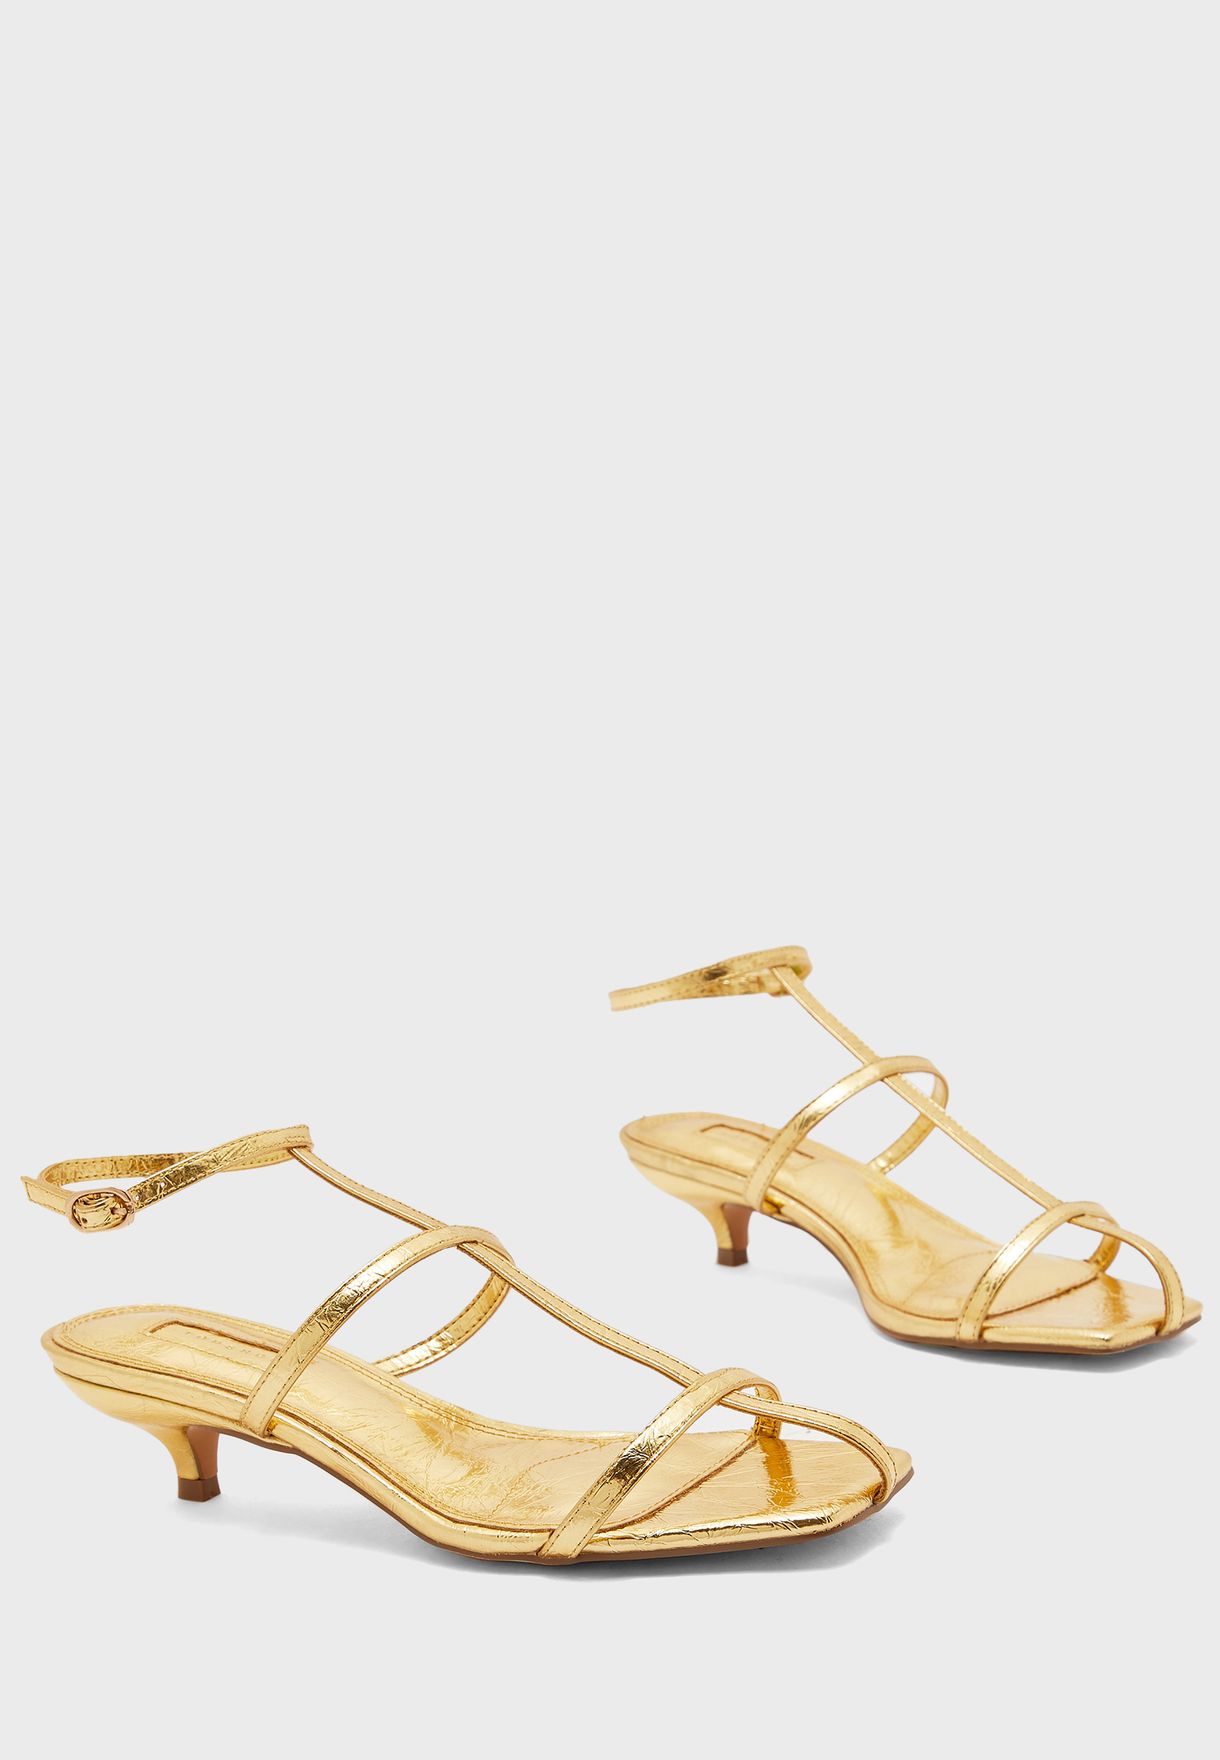 Buy > gold sandal low heel > in stock